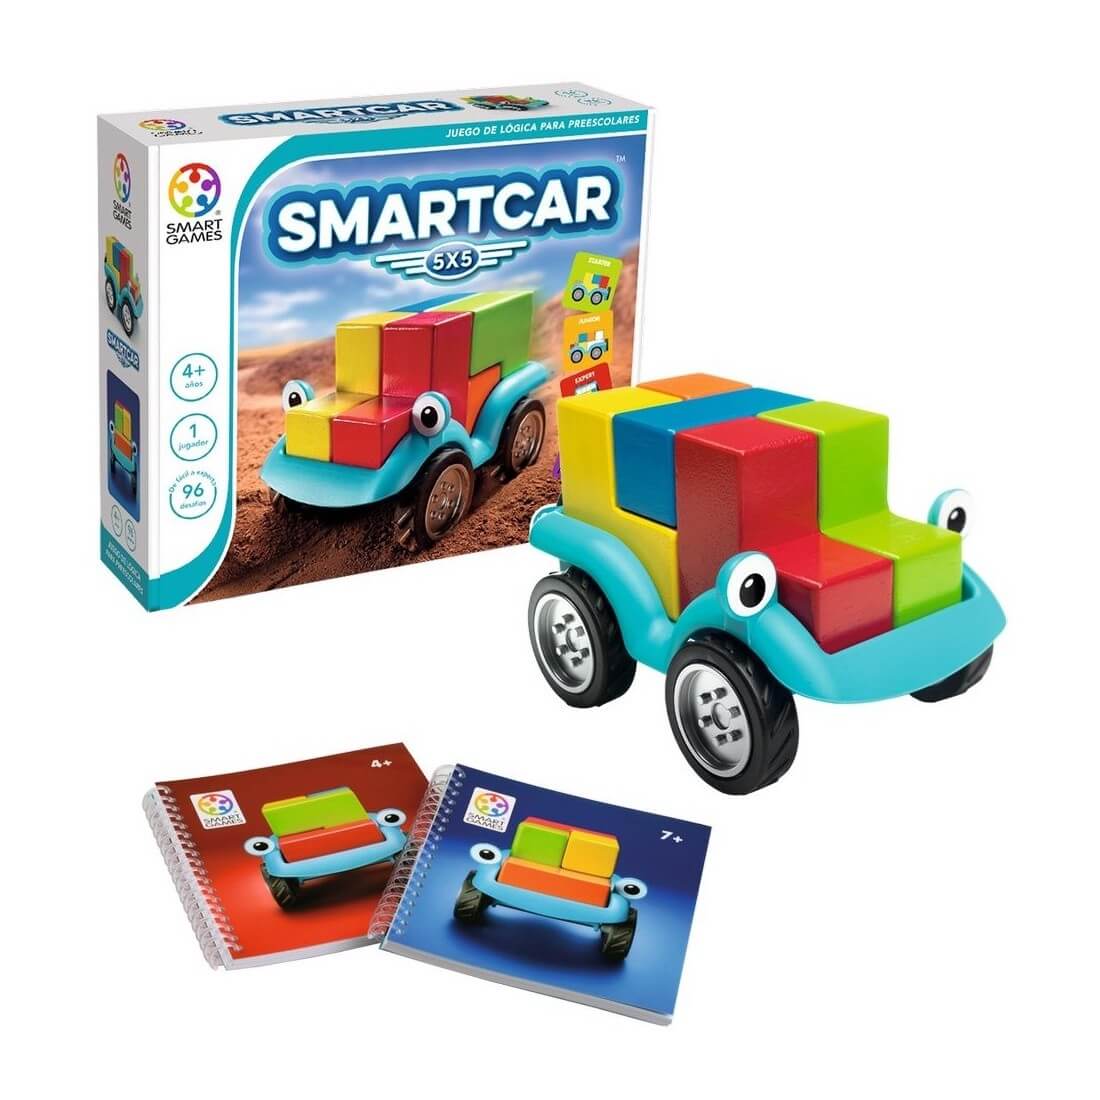 Smart Games - Smartcar 5x5 – Boutique LeoLudo